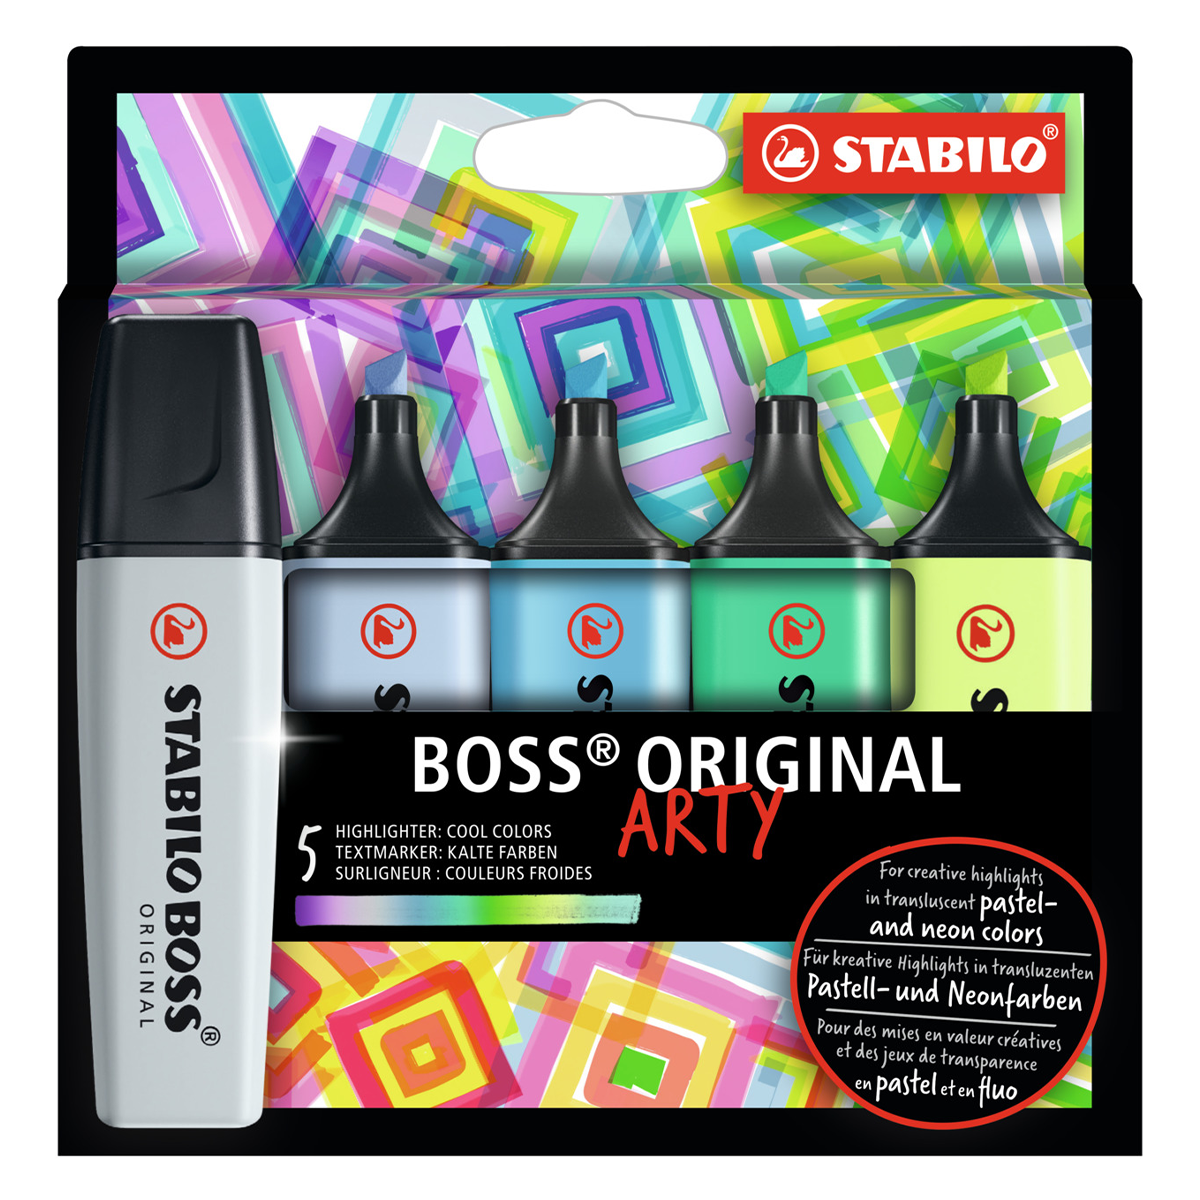 Stabilo Boss Original Highlighter 15 pcs Deskset